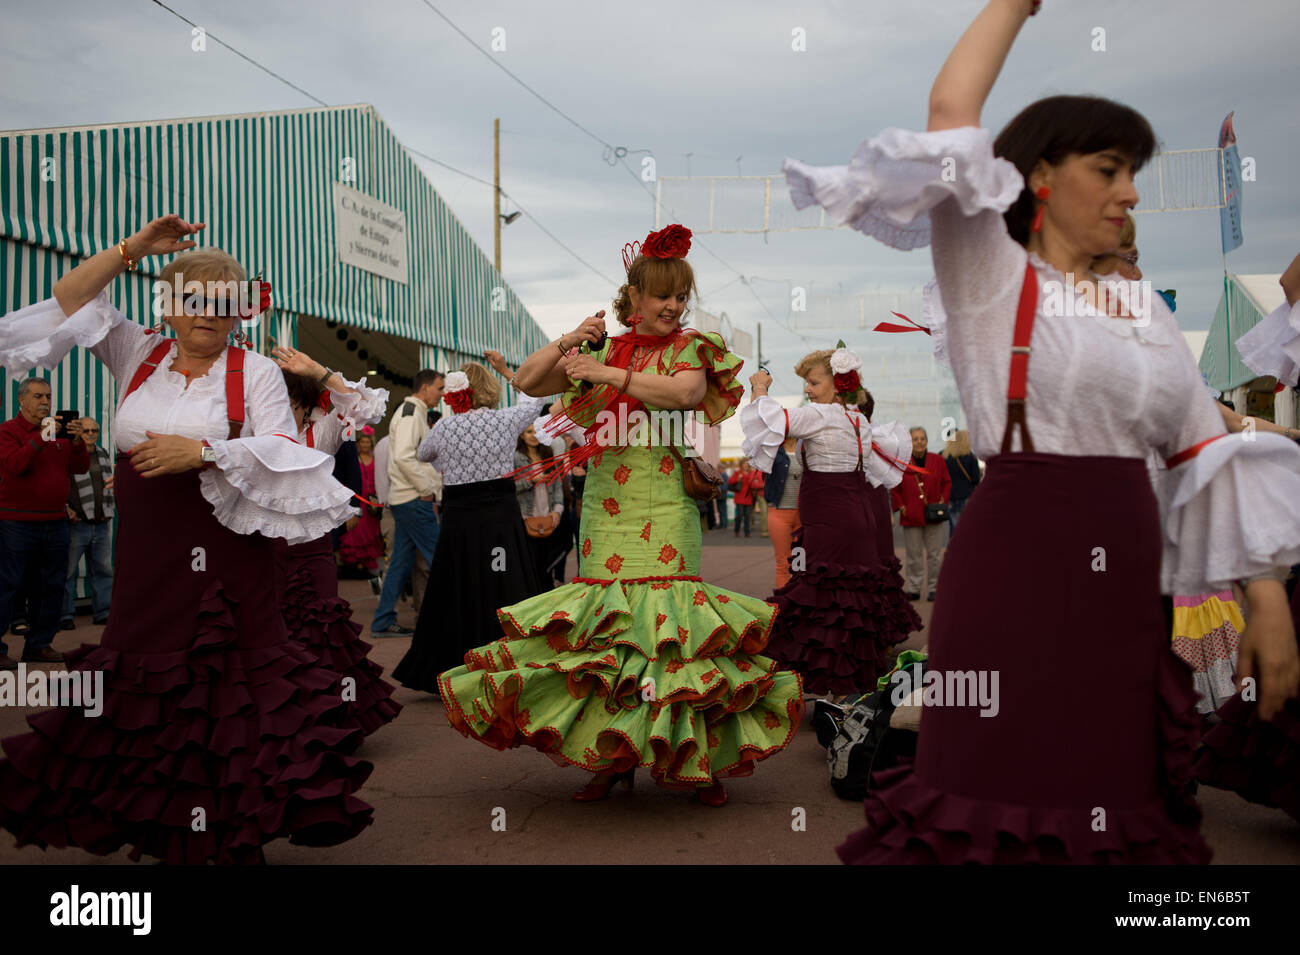 Women dancing Sevillanas (Typical Andalusian dance) during la Feria de Abril in Barcelona. Stock Photo